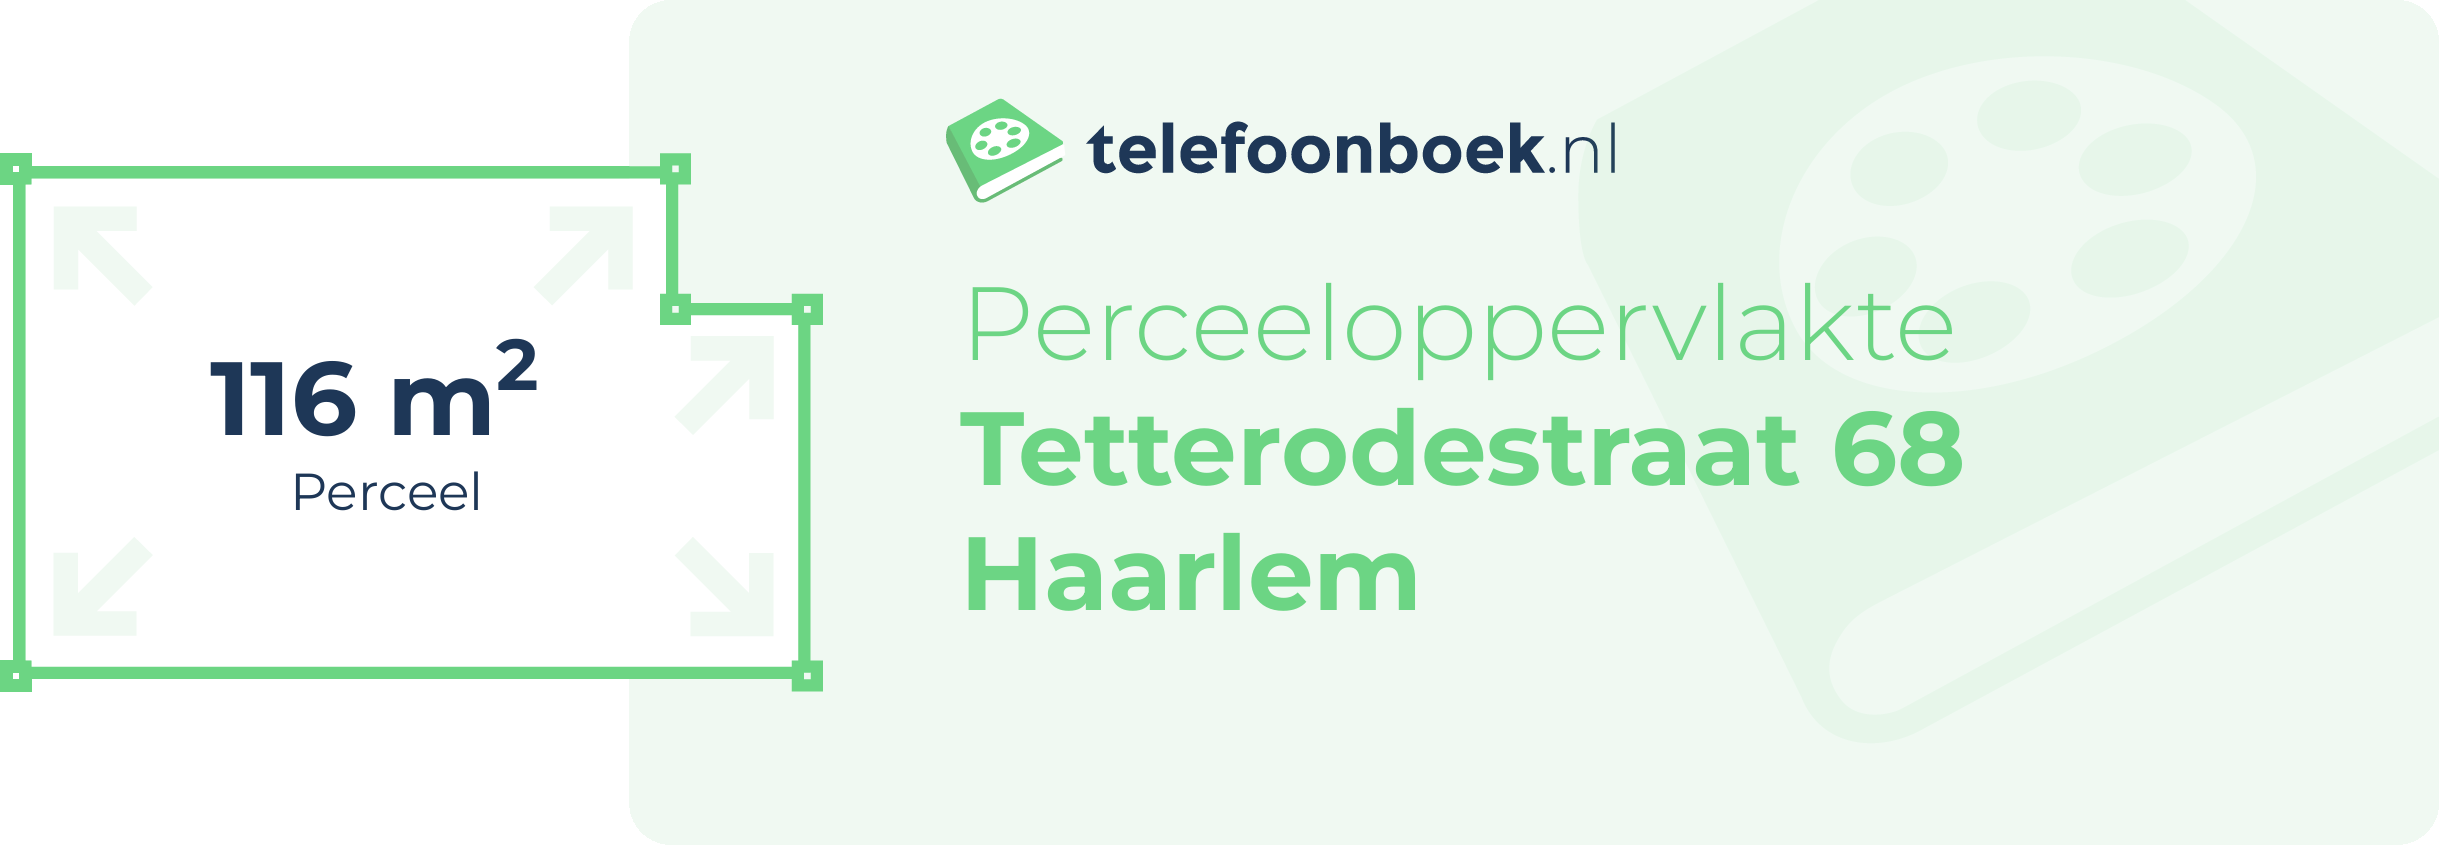 Perceeloppervlakte Tetterodestraat 68 Haarlem